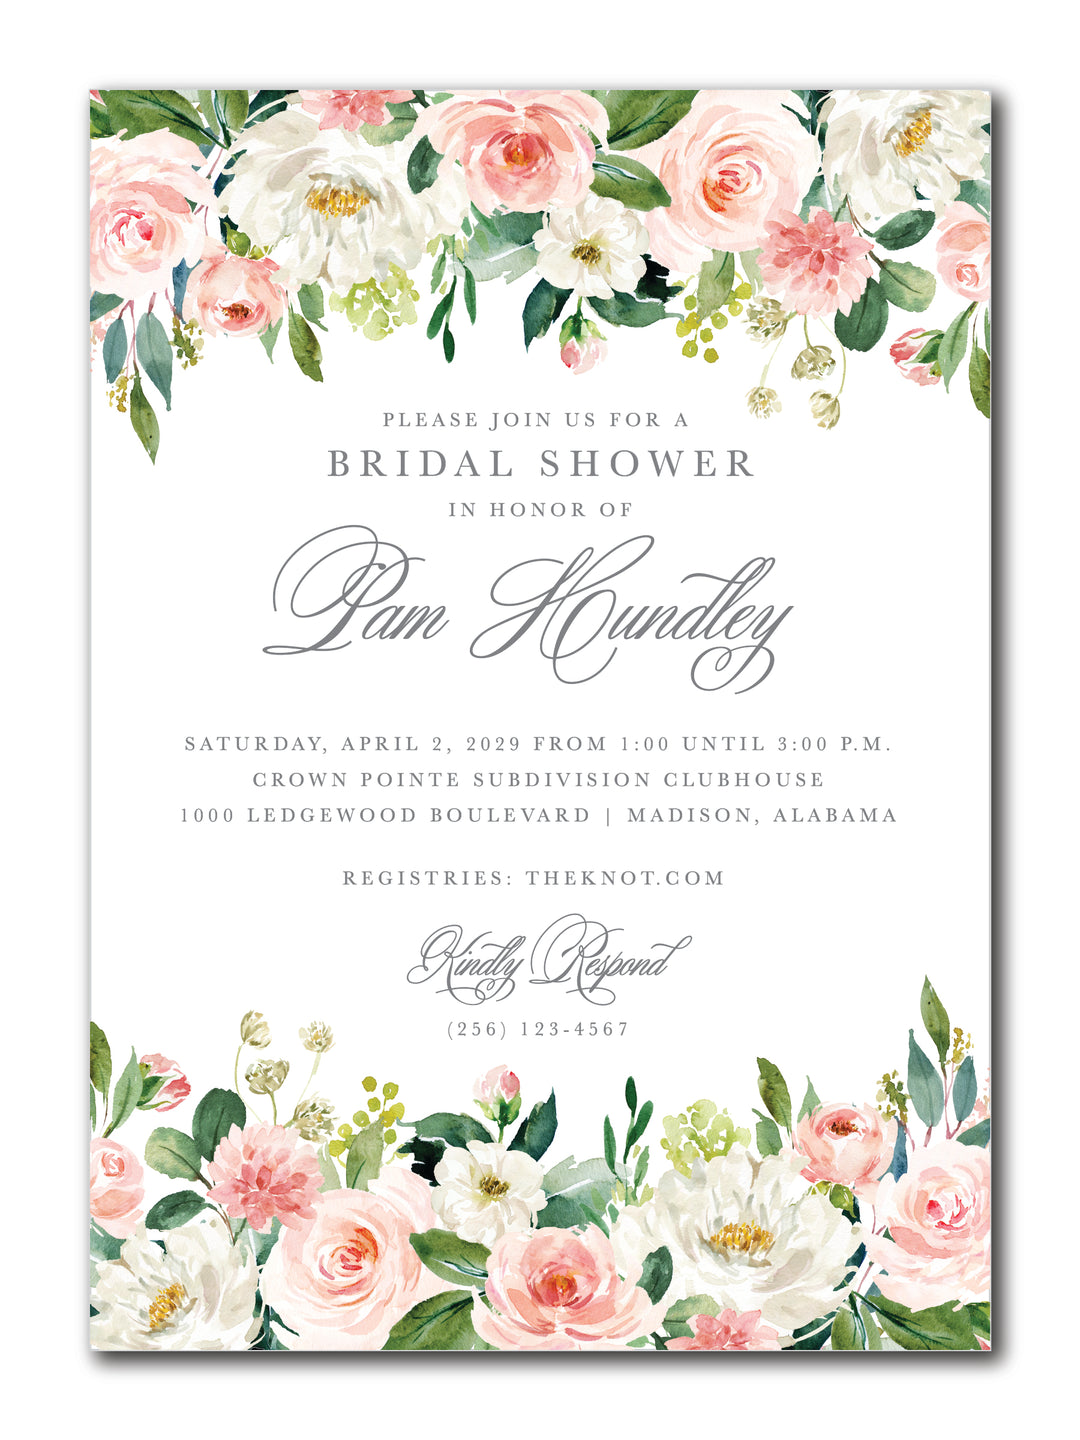 The Pam Bridal Shower Invitation